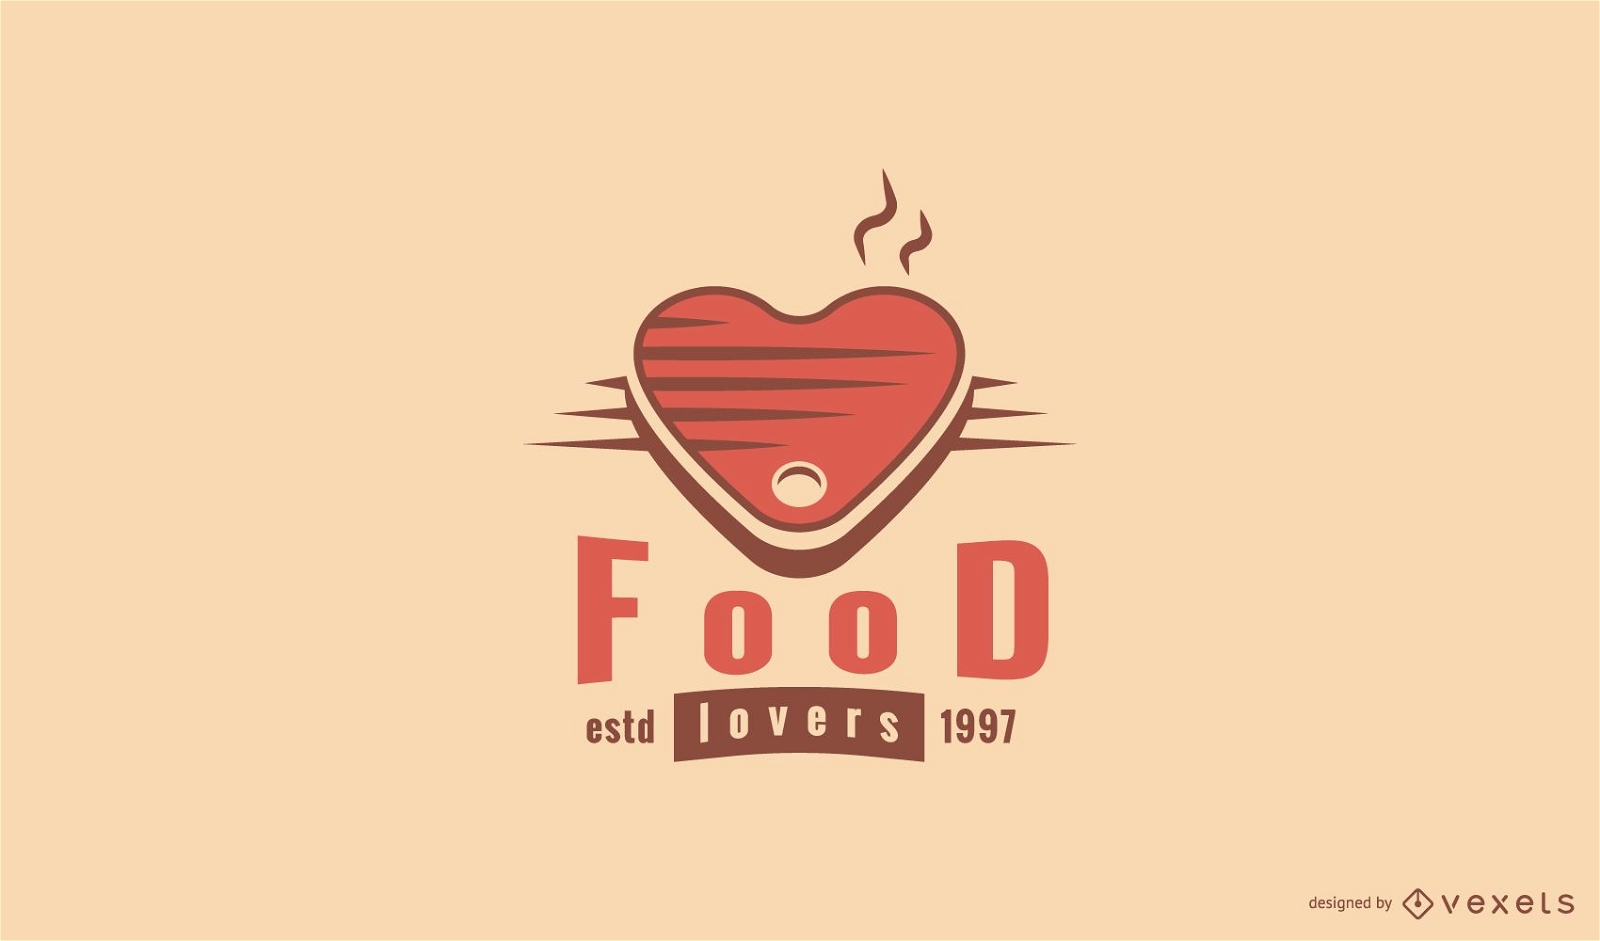 Food lovers logo template